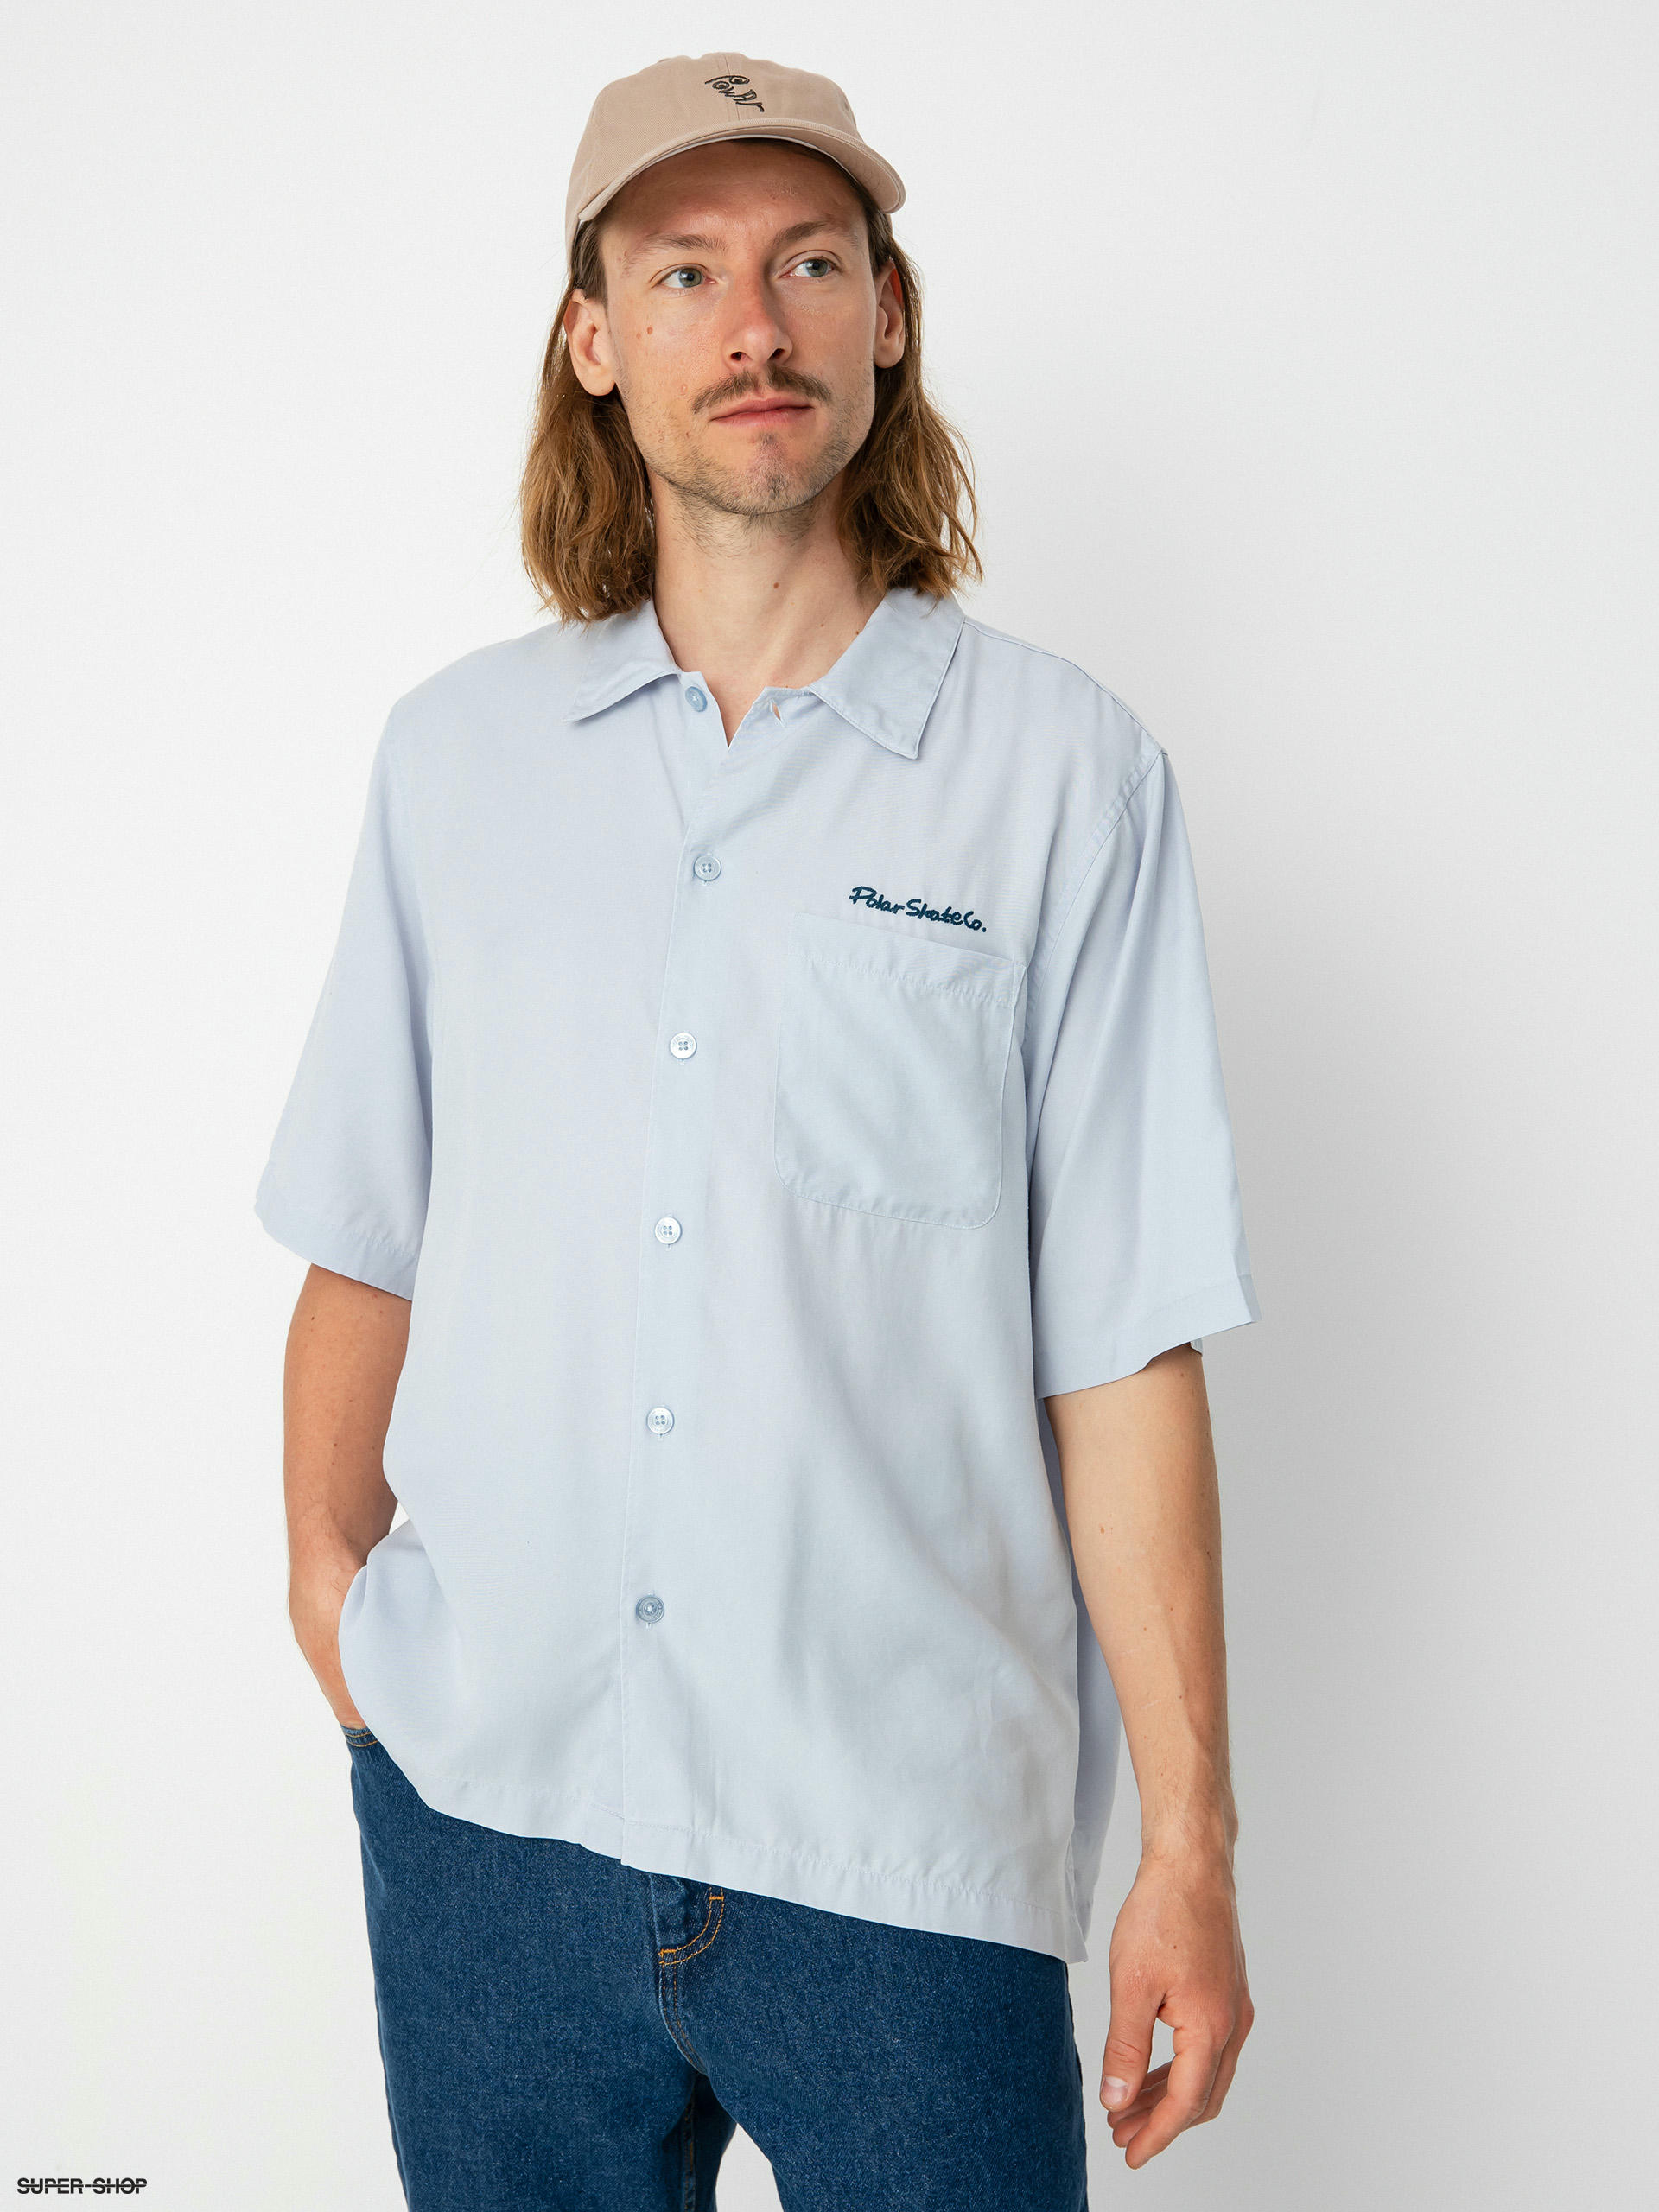 Polar Skate Dual Personality Bowling Shirt (light blue/navy)